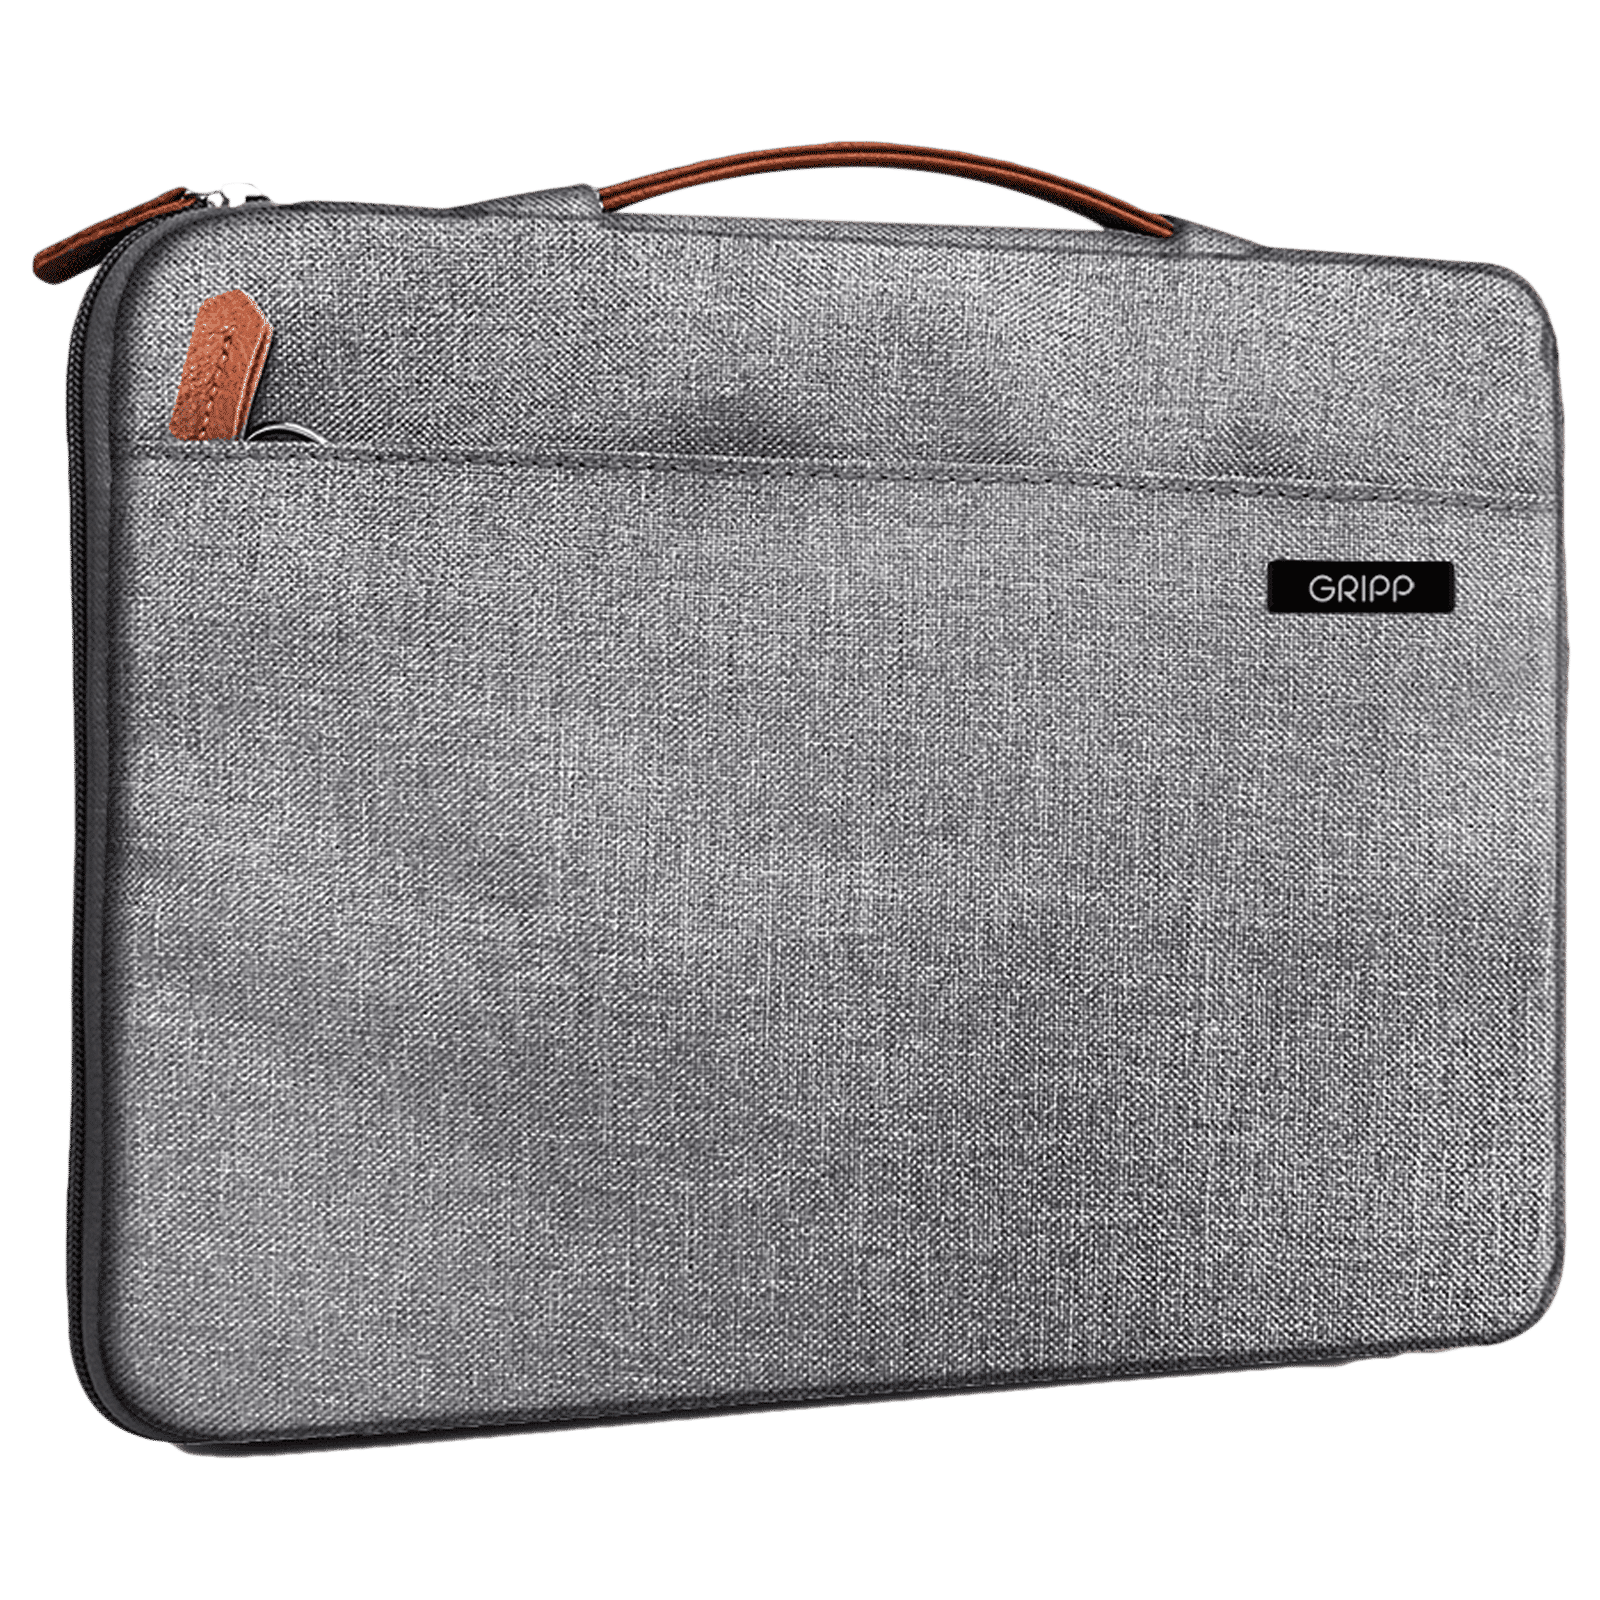 croma laptops | Used Bags & Luggage in Bikaner | Home & Lifestyle Quikr  Bazaar Bikaner